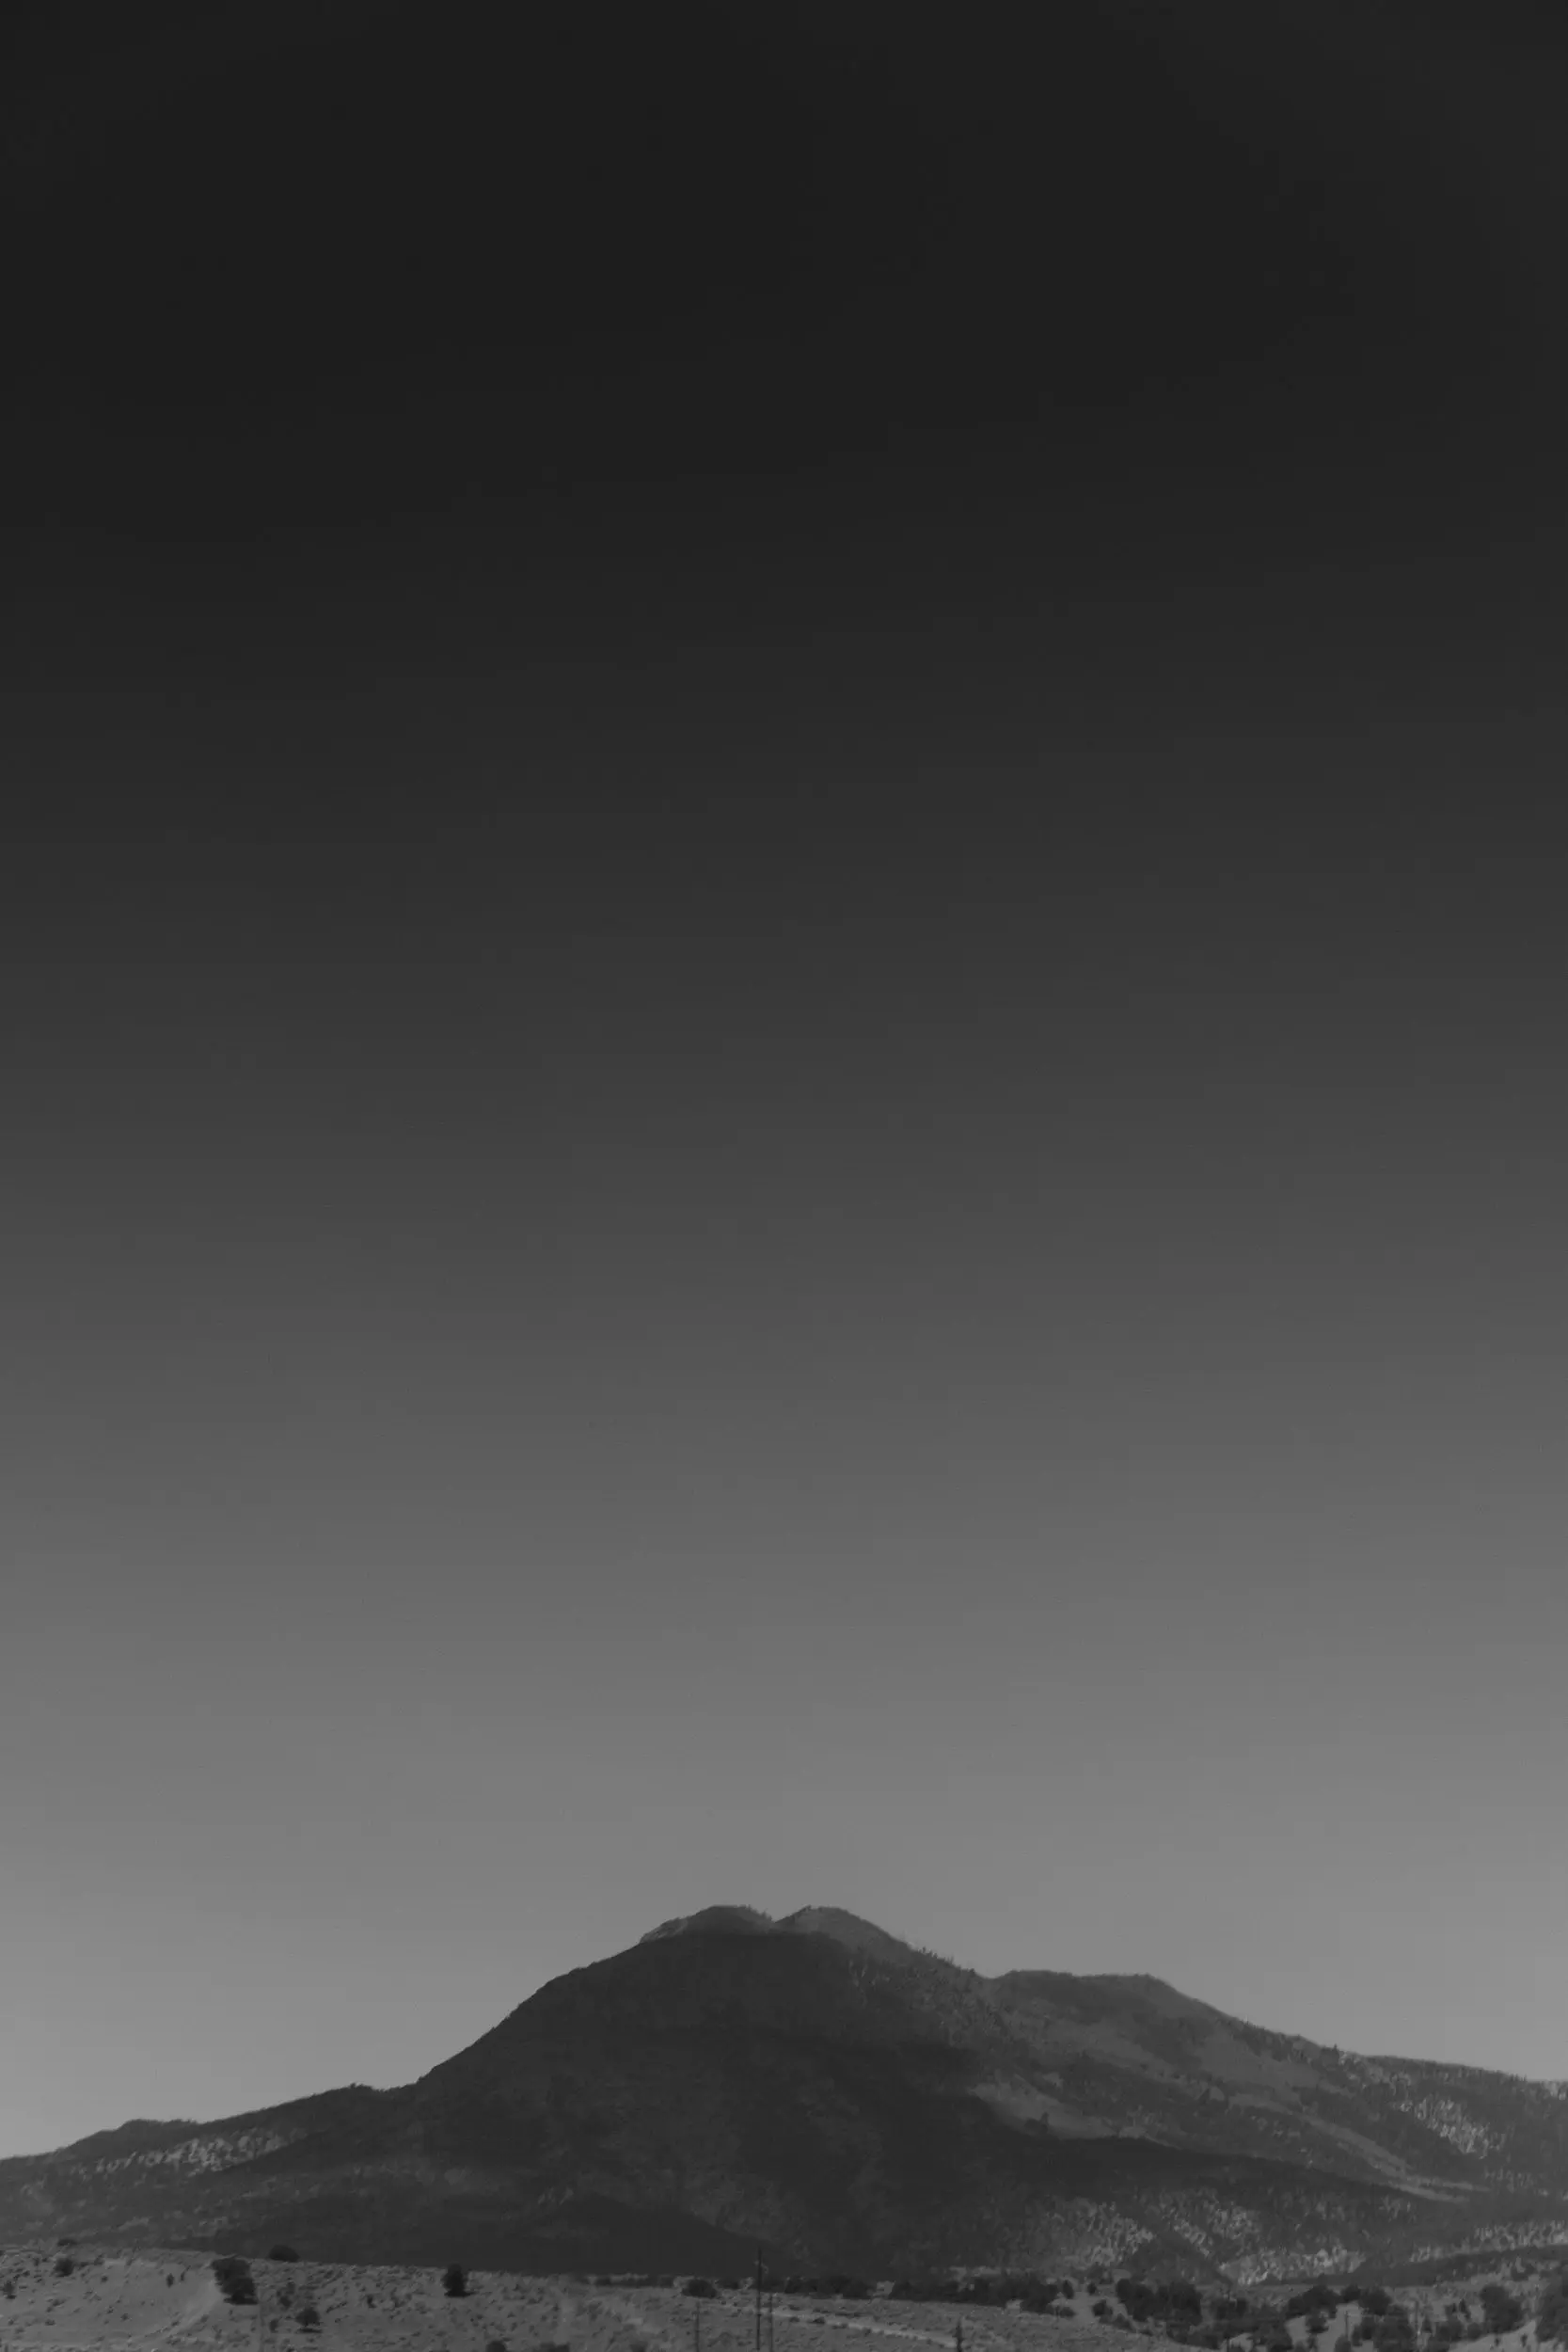 Black and white shadowed hill underneath a dark sky.